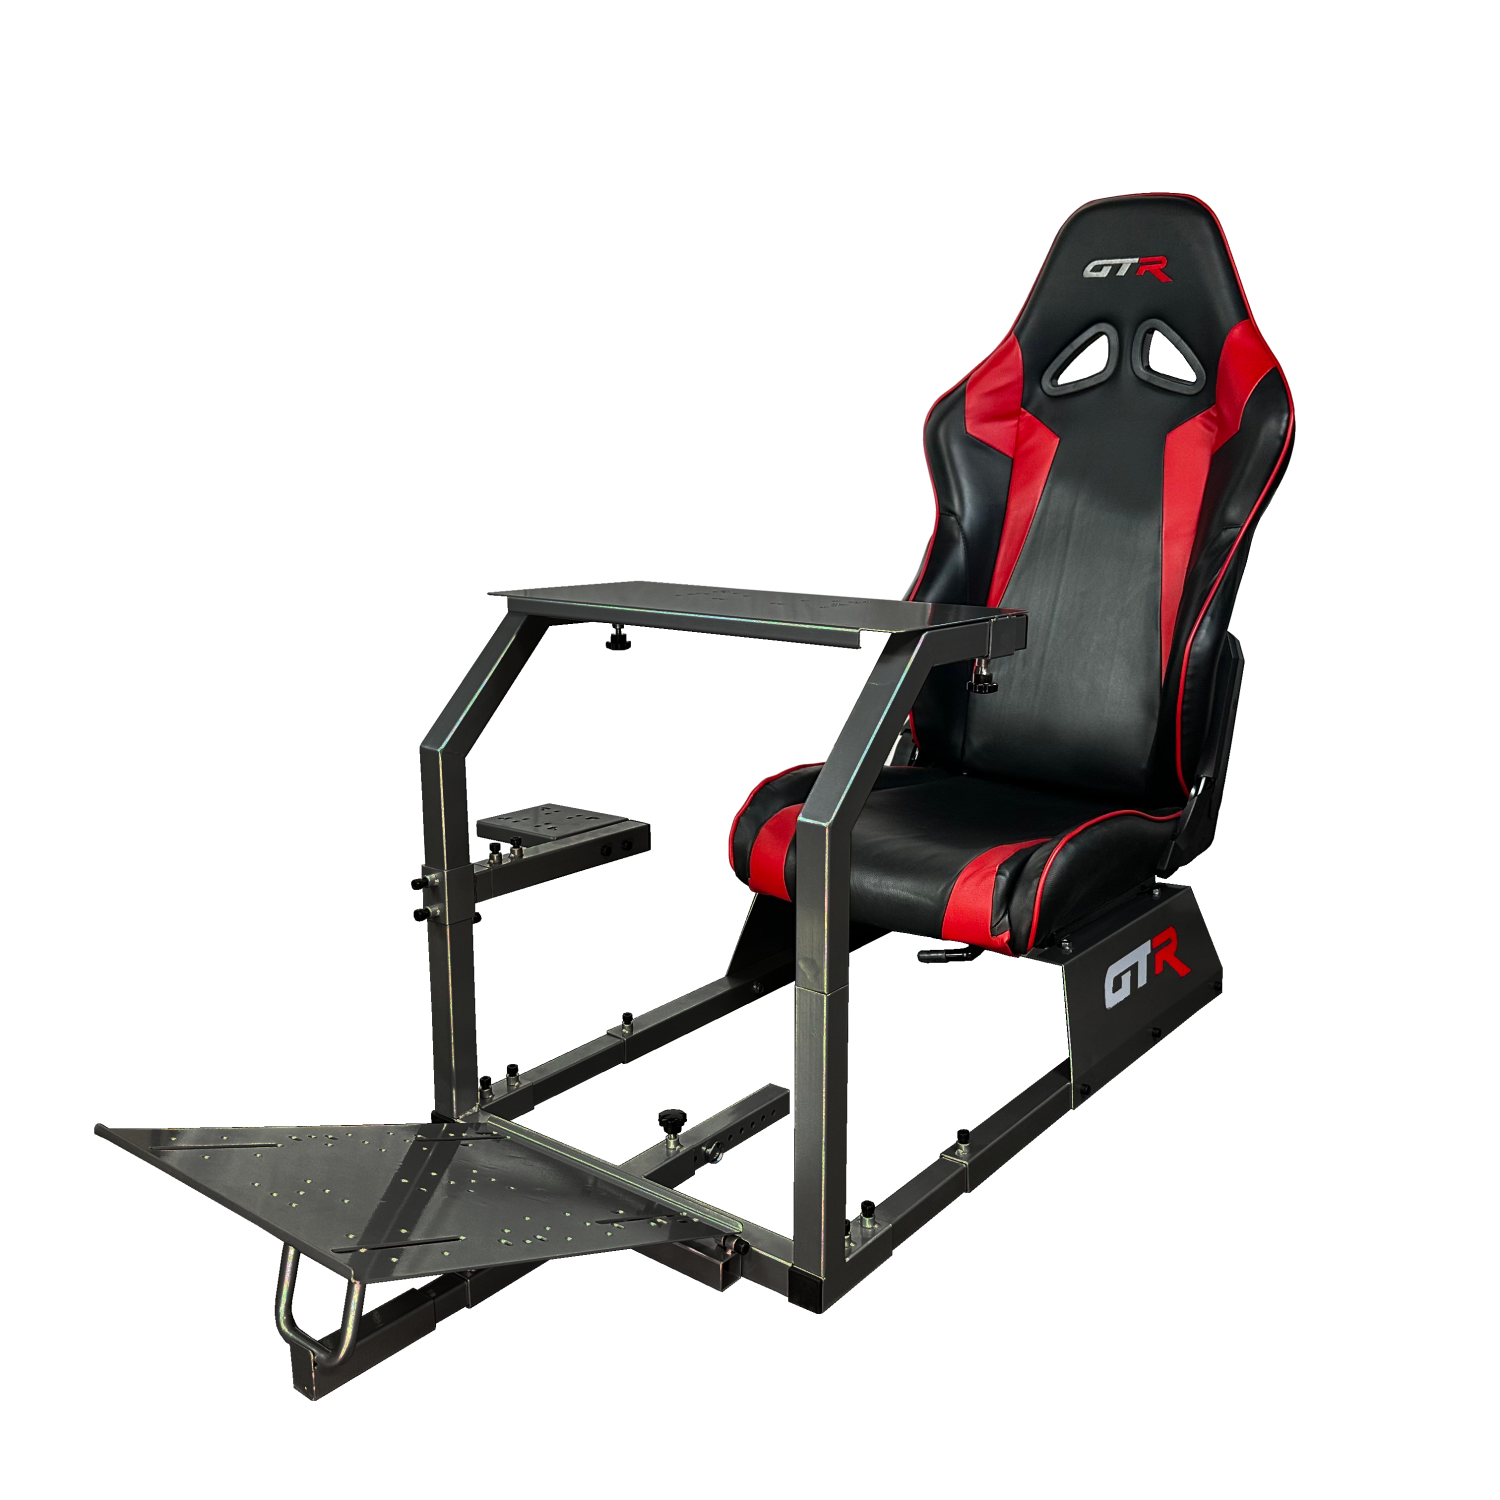 GTR Simulator GTA Model Black Frame with Black/Red Real Racing Seat